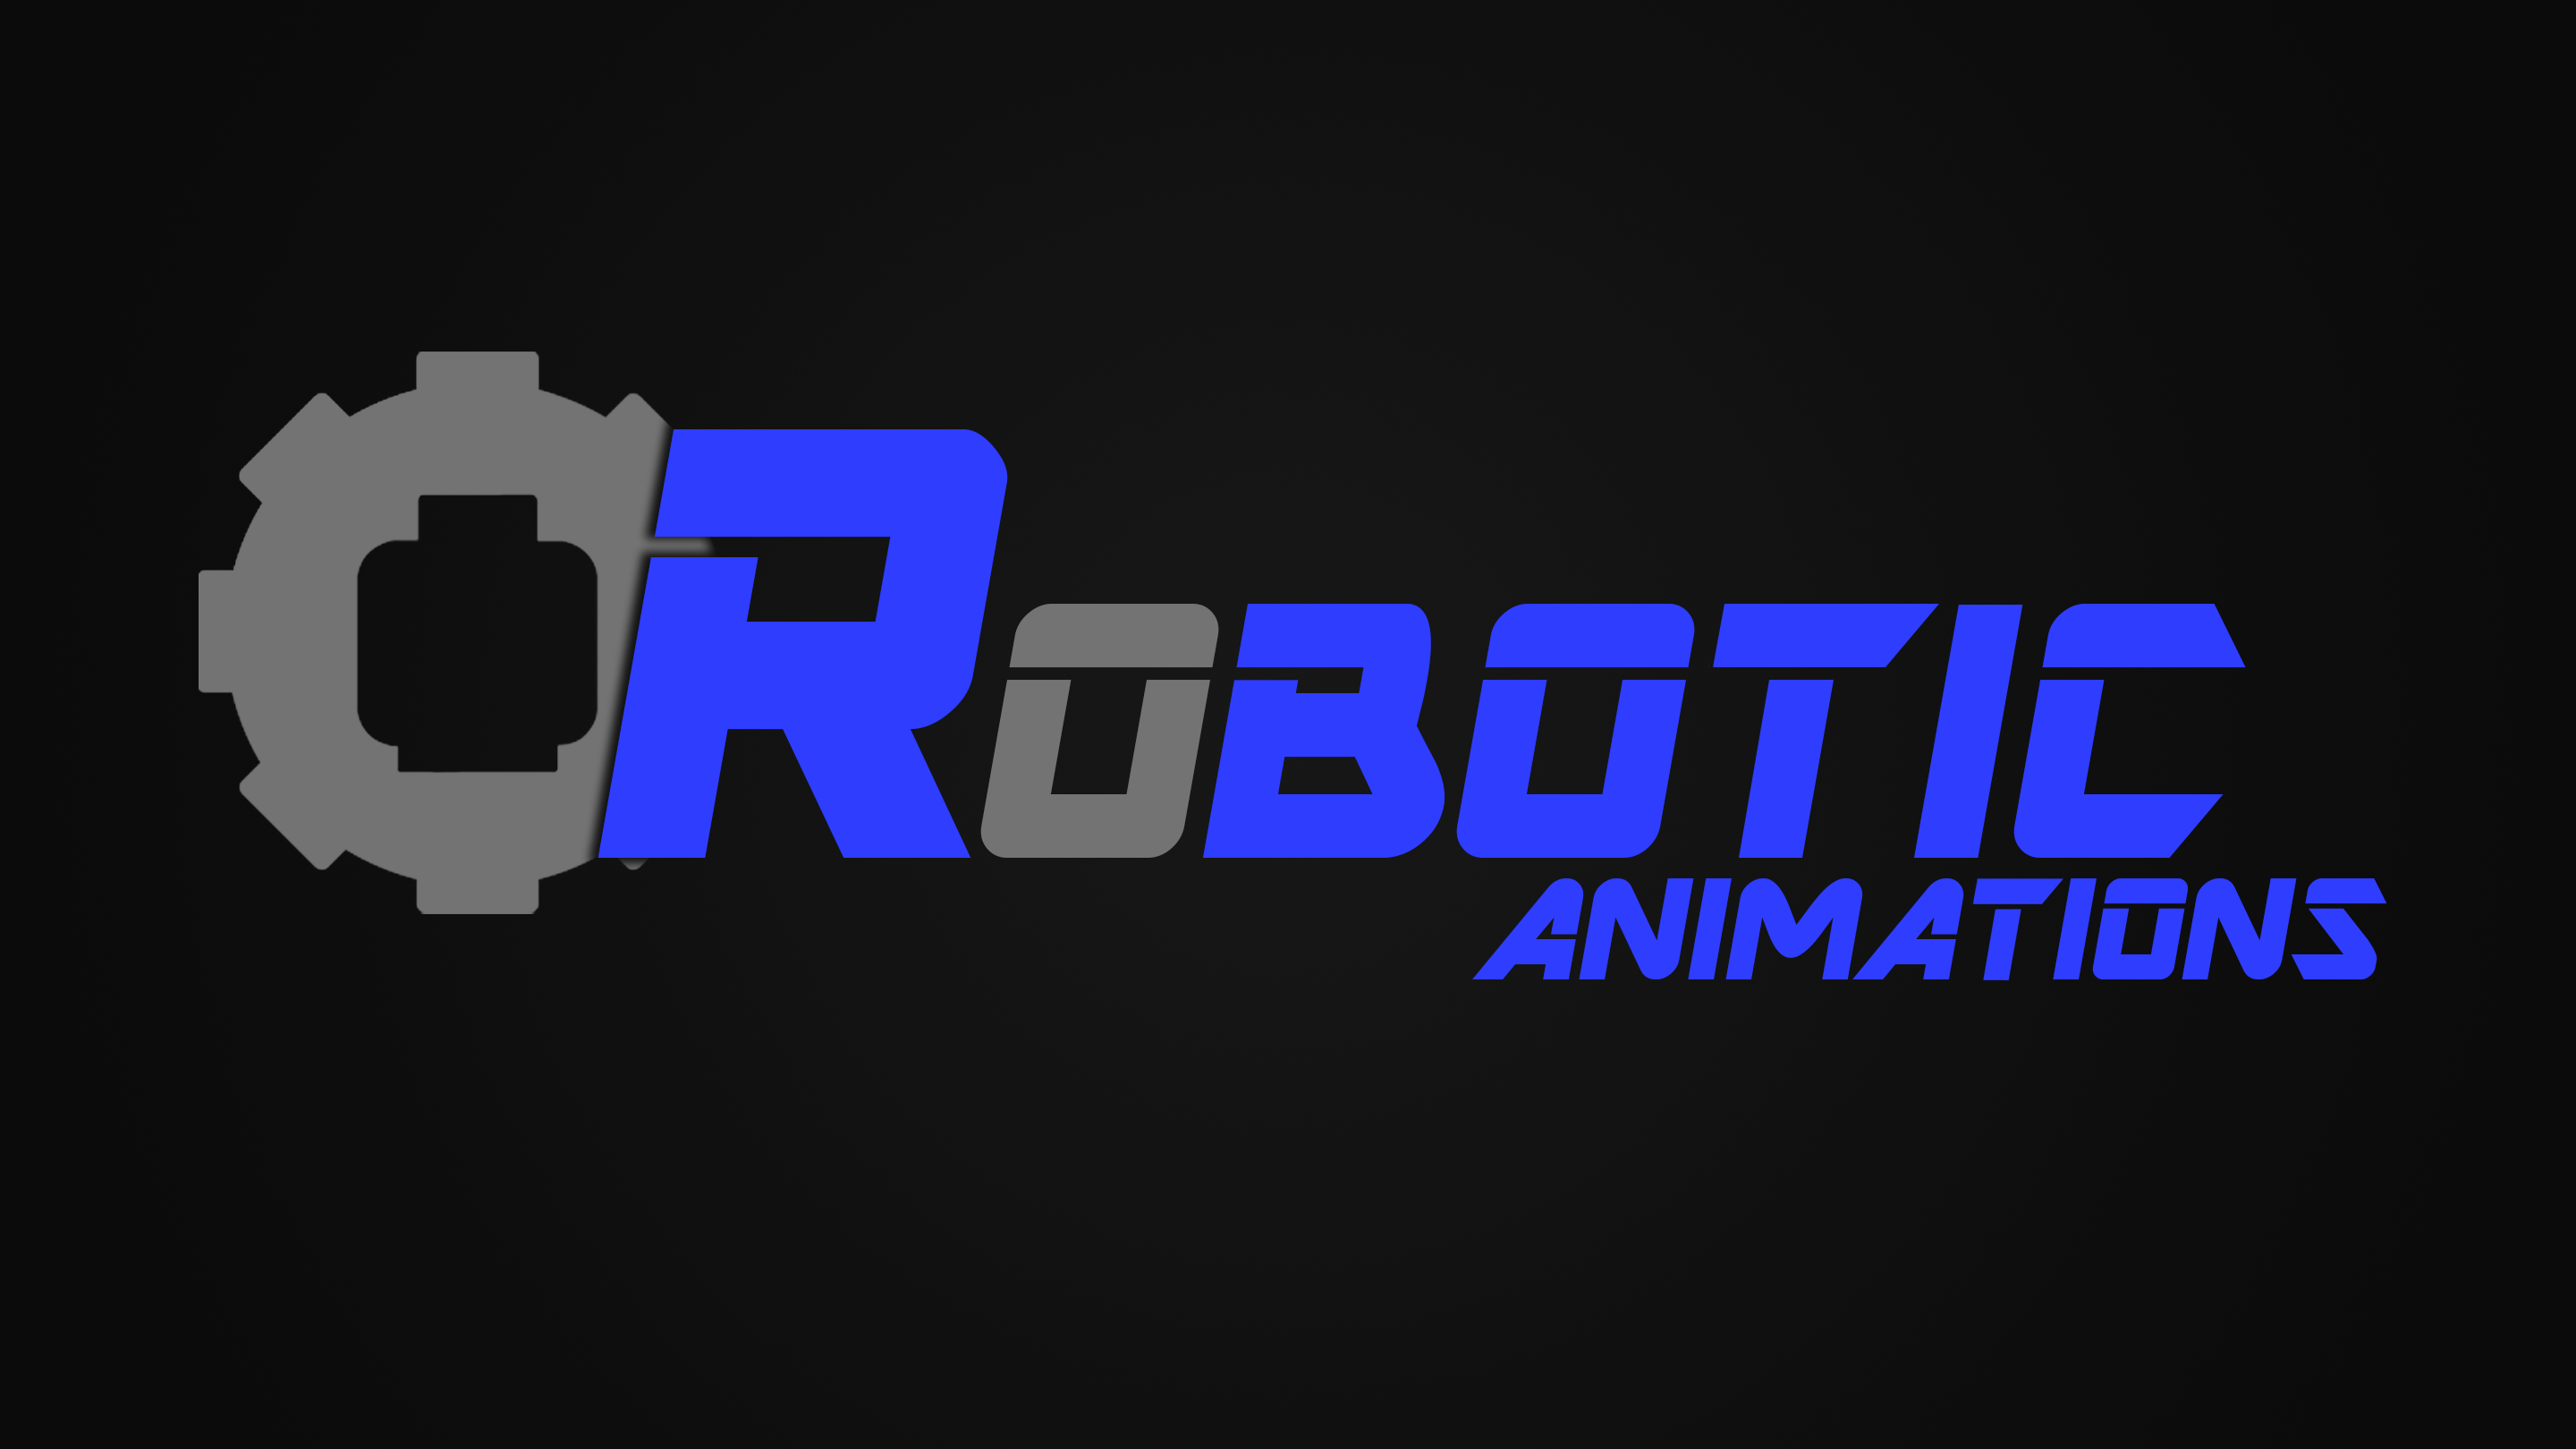 http://www.brickshelf.com/gallery/legoguy501/Random/robotic_animations1_4.png